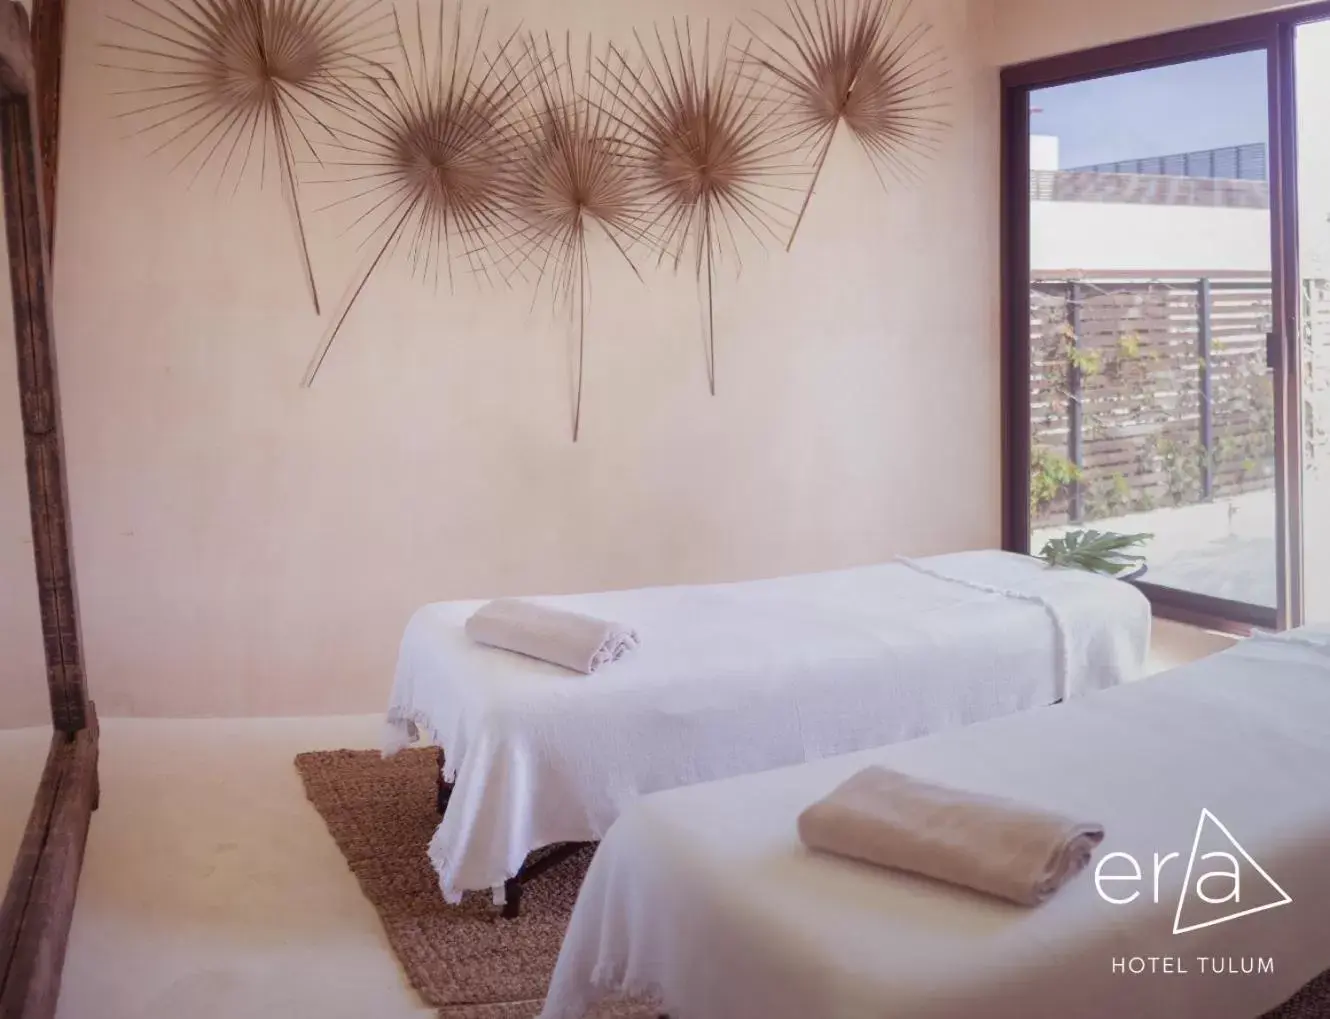 Massage in Era Hotel & Spa Tulum